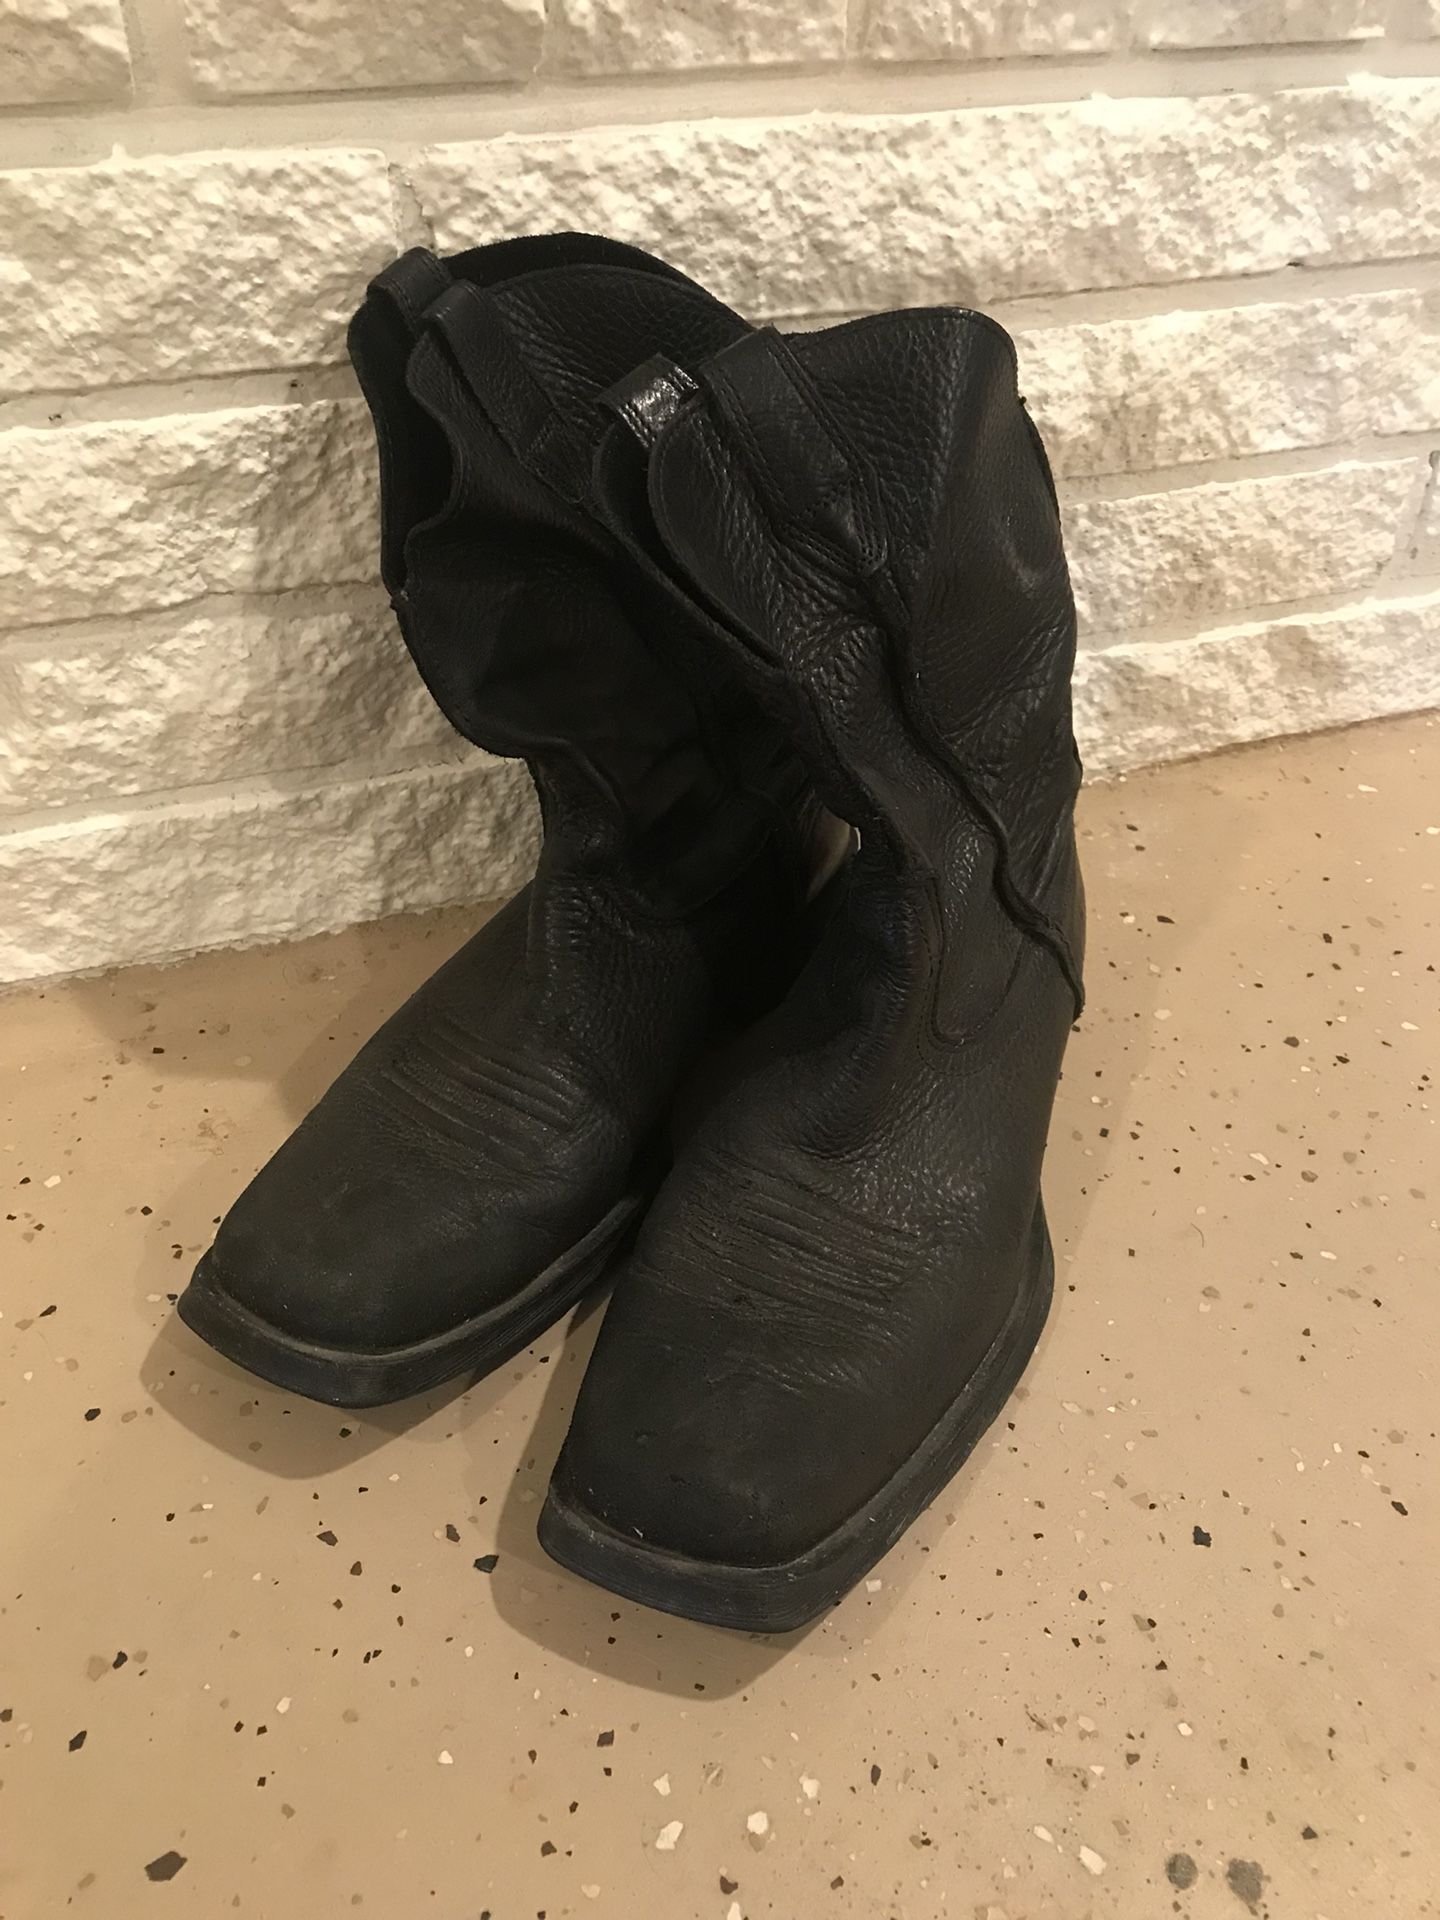 Ariat Boots